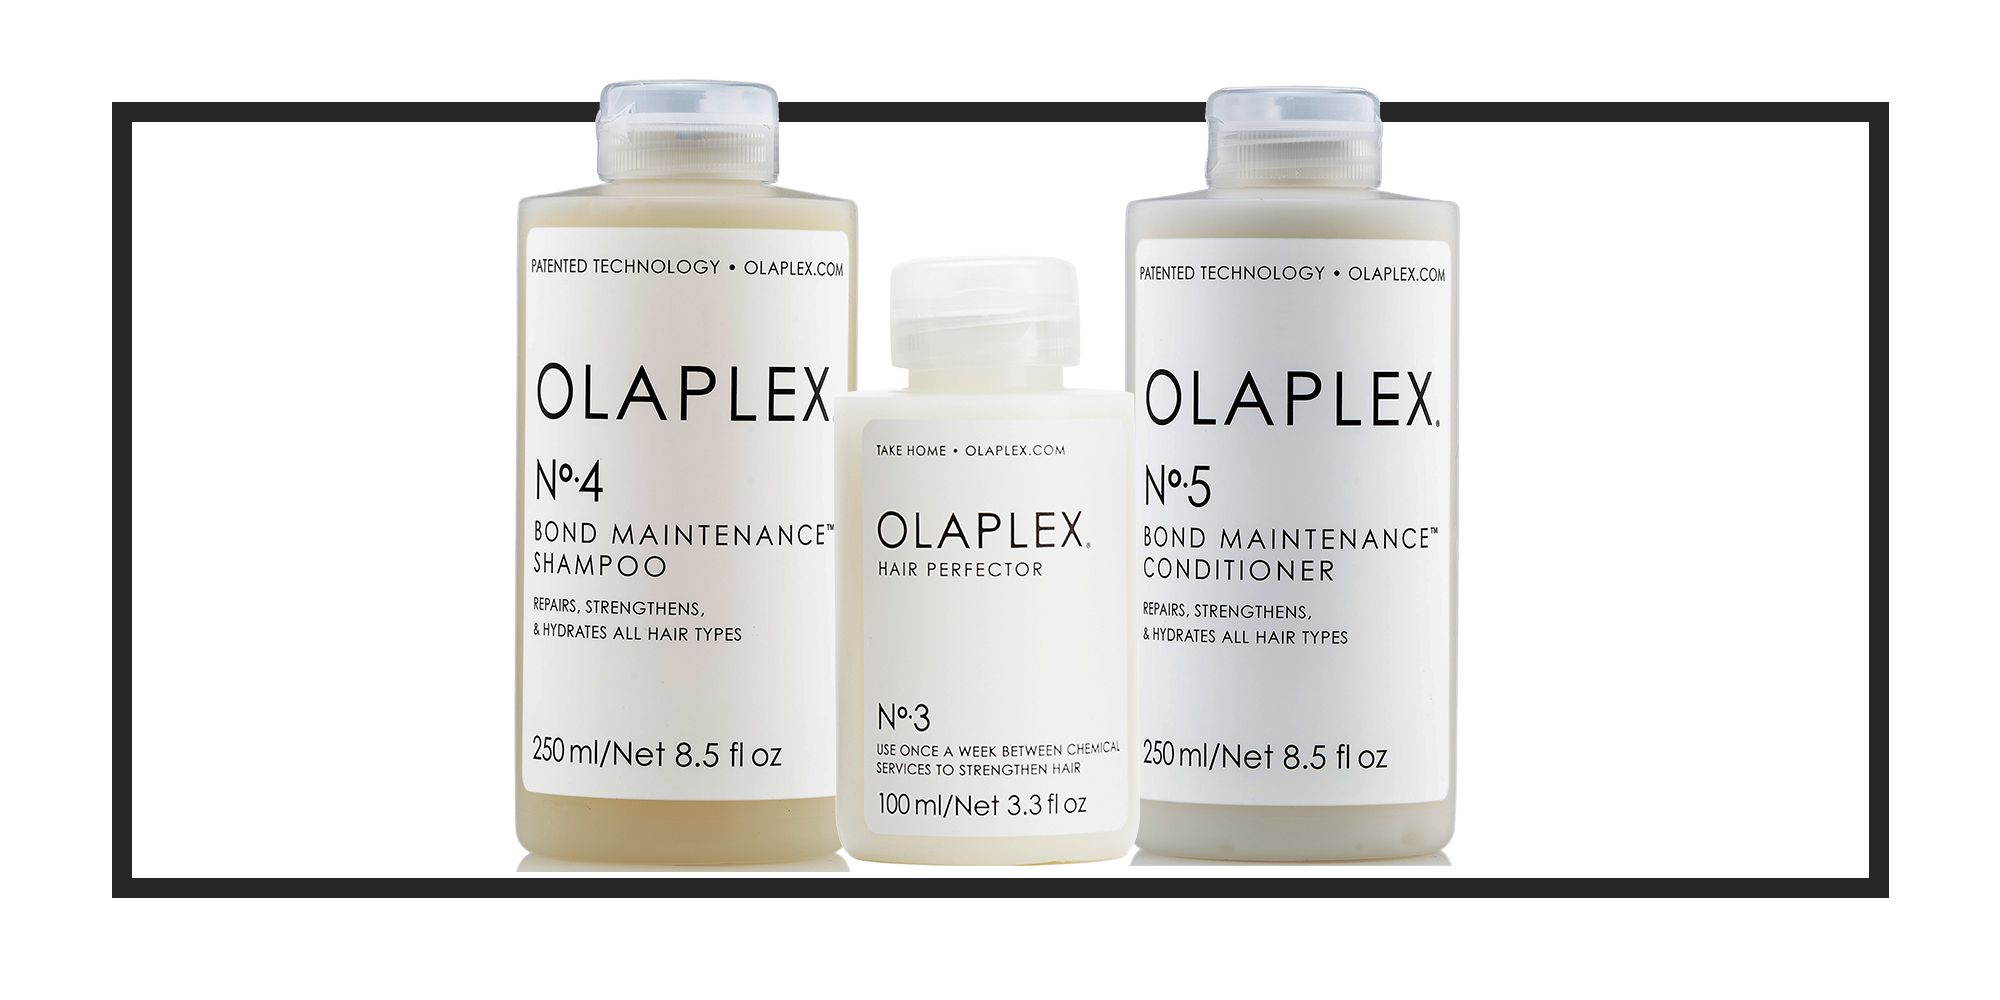 Serrated forsinke køretøj Olaplex launches shampoo and conditioner for damaged hair - New Olaplex  products